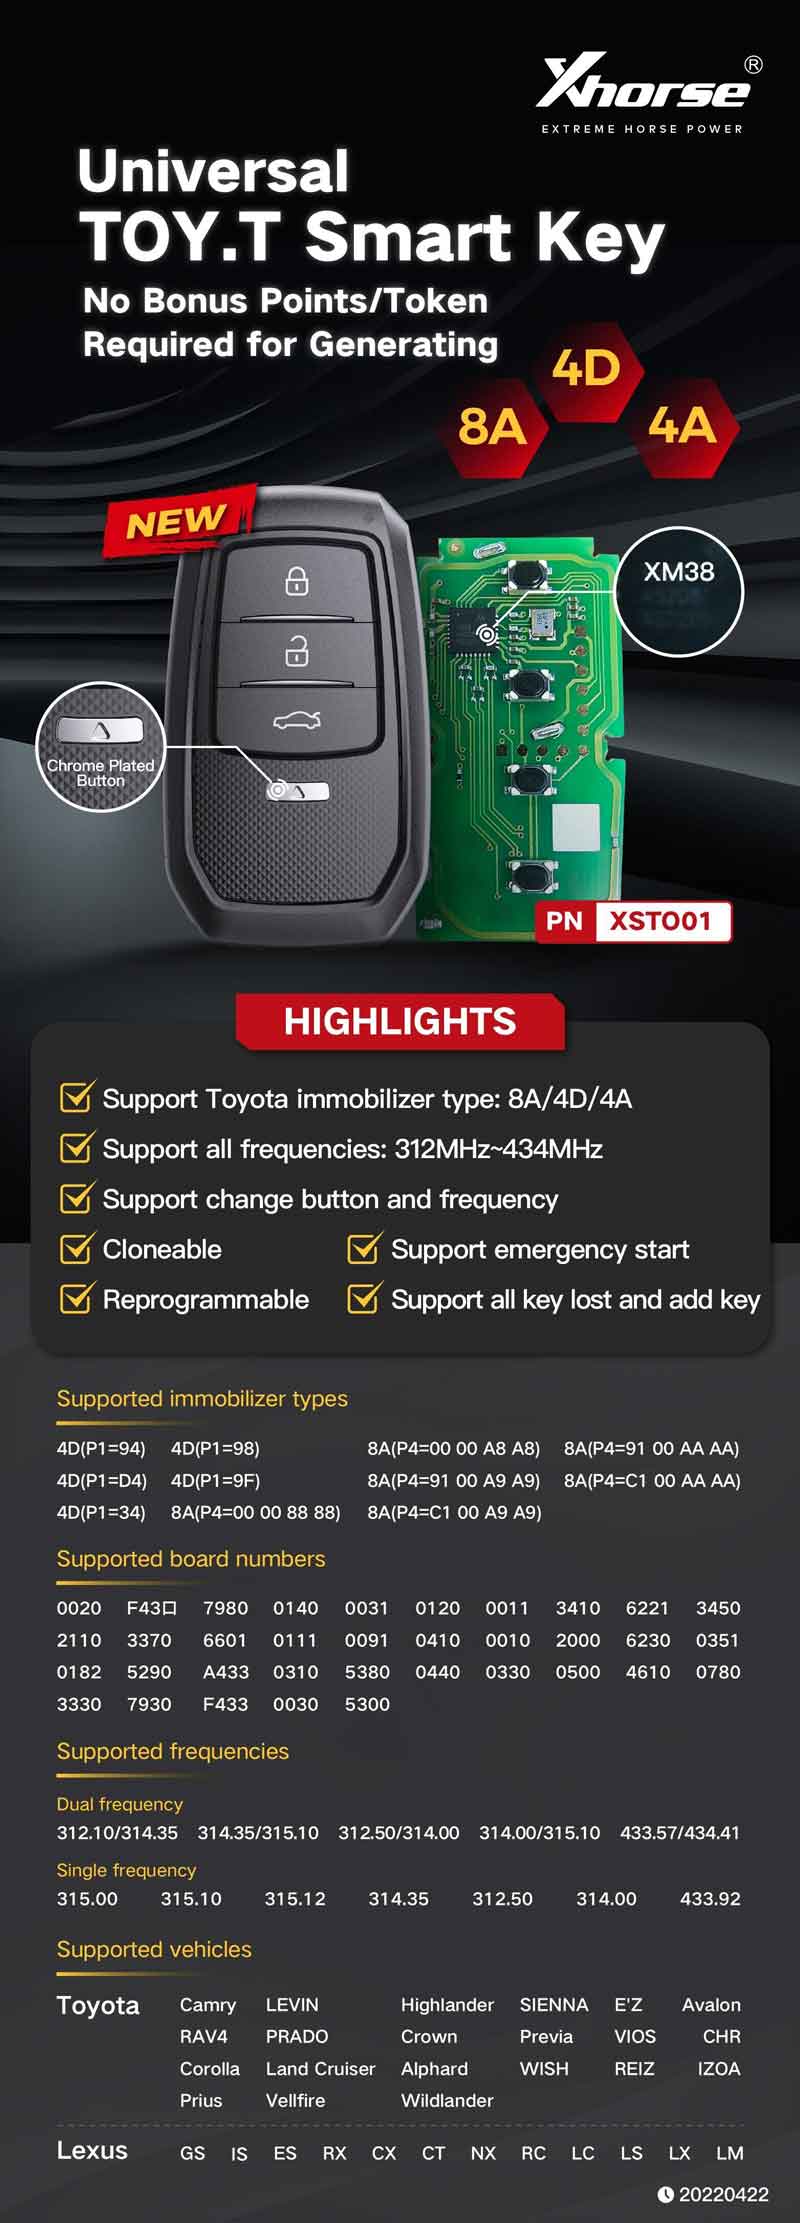 Introducing Xhorse Toyota XM38 Smart Key